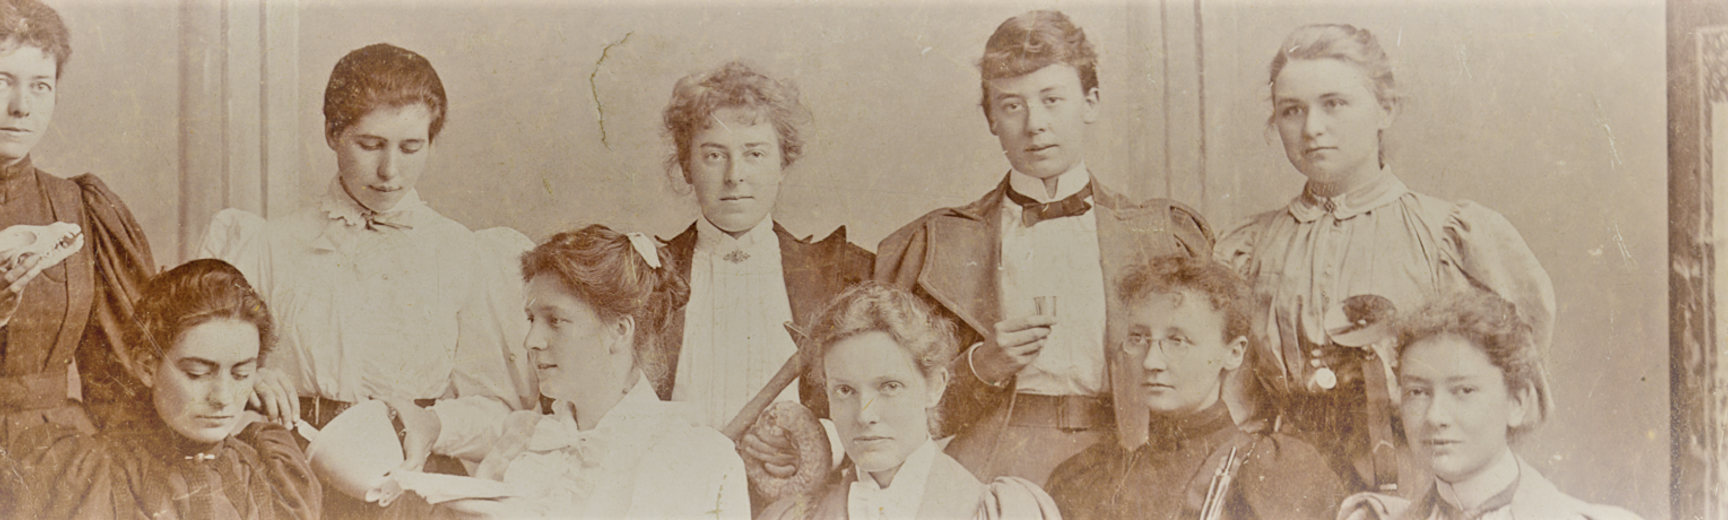 Women Scientists c 1890